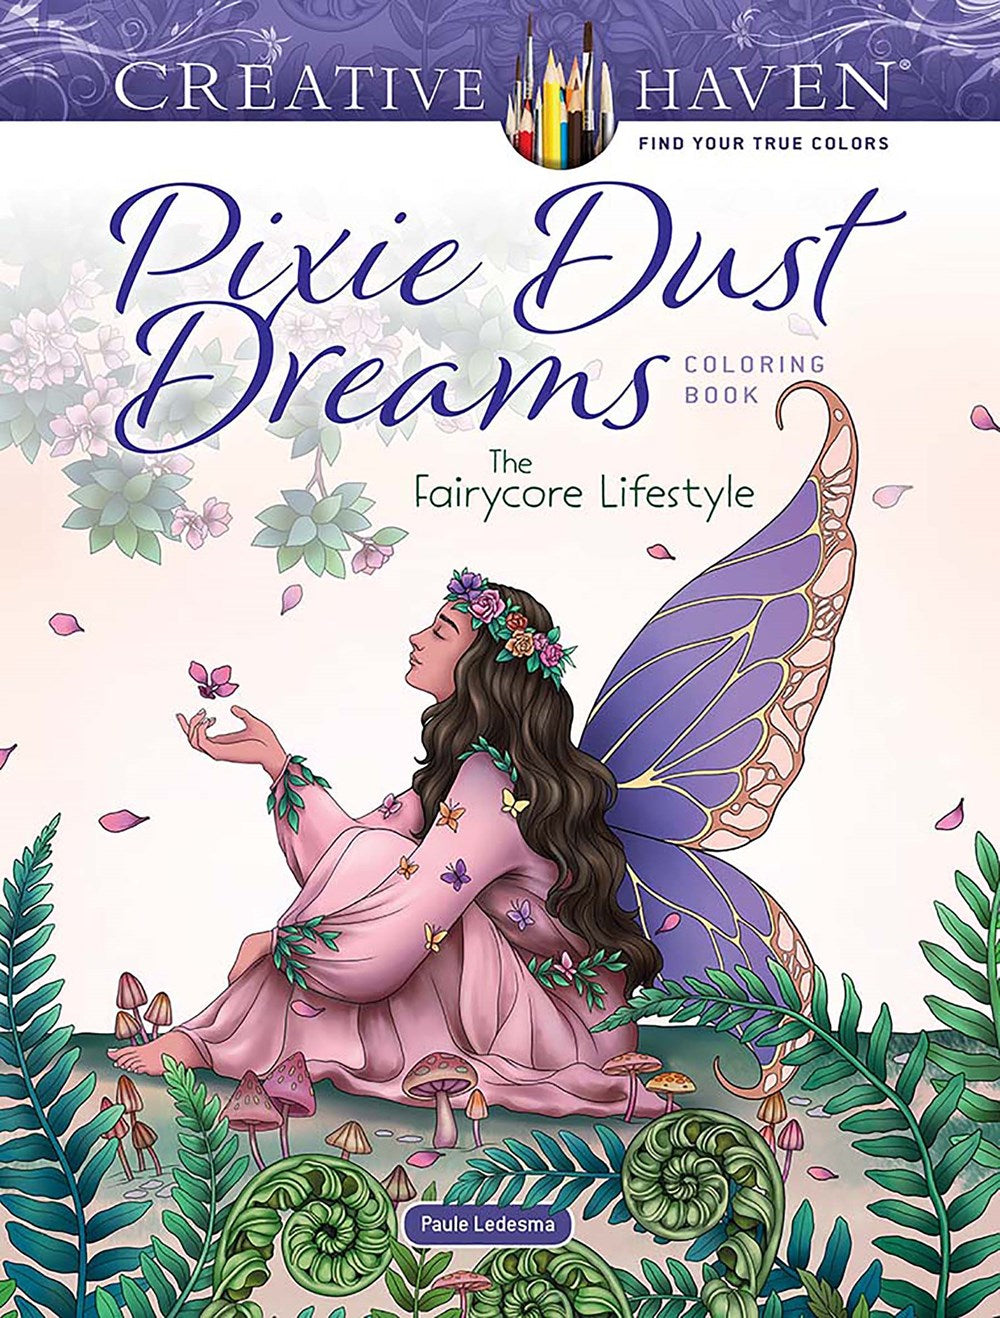 Pixie Dust Dreams Coloring Book